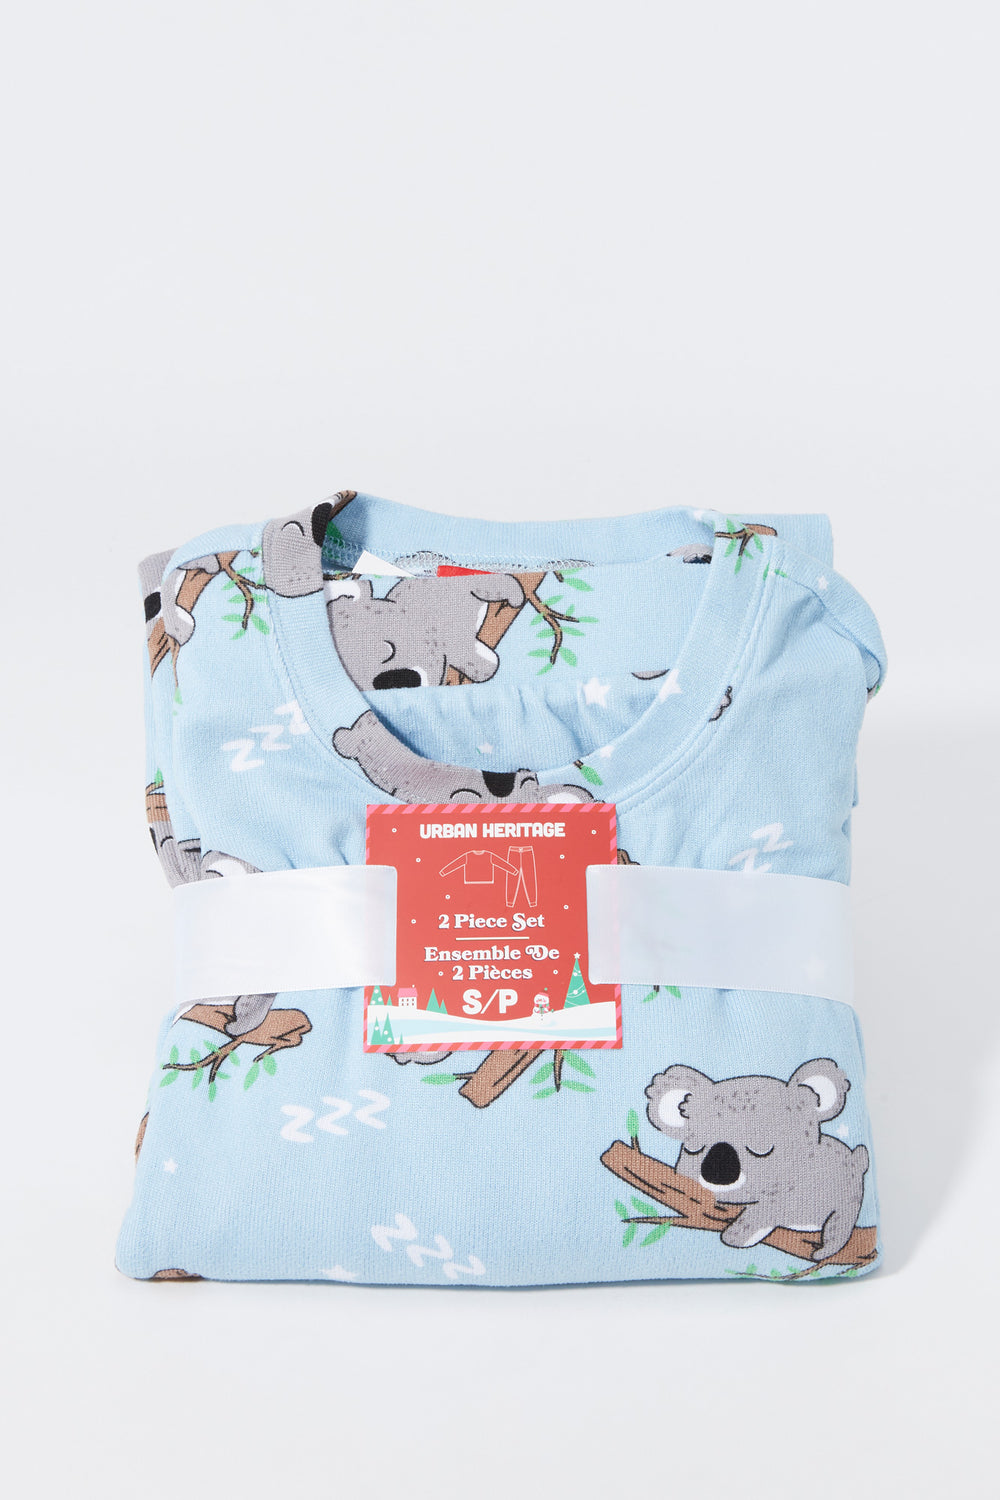 Koala Print 2 Piece Holiday Pajama Set Koala Print 2 Piece Holiday Pajama Set 1